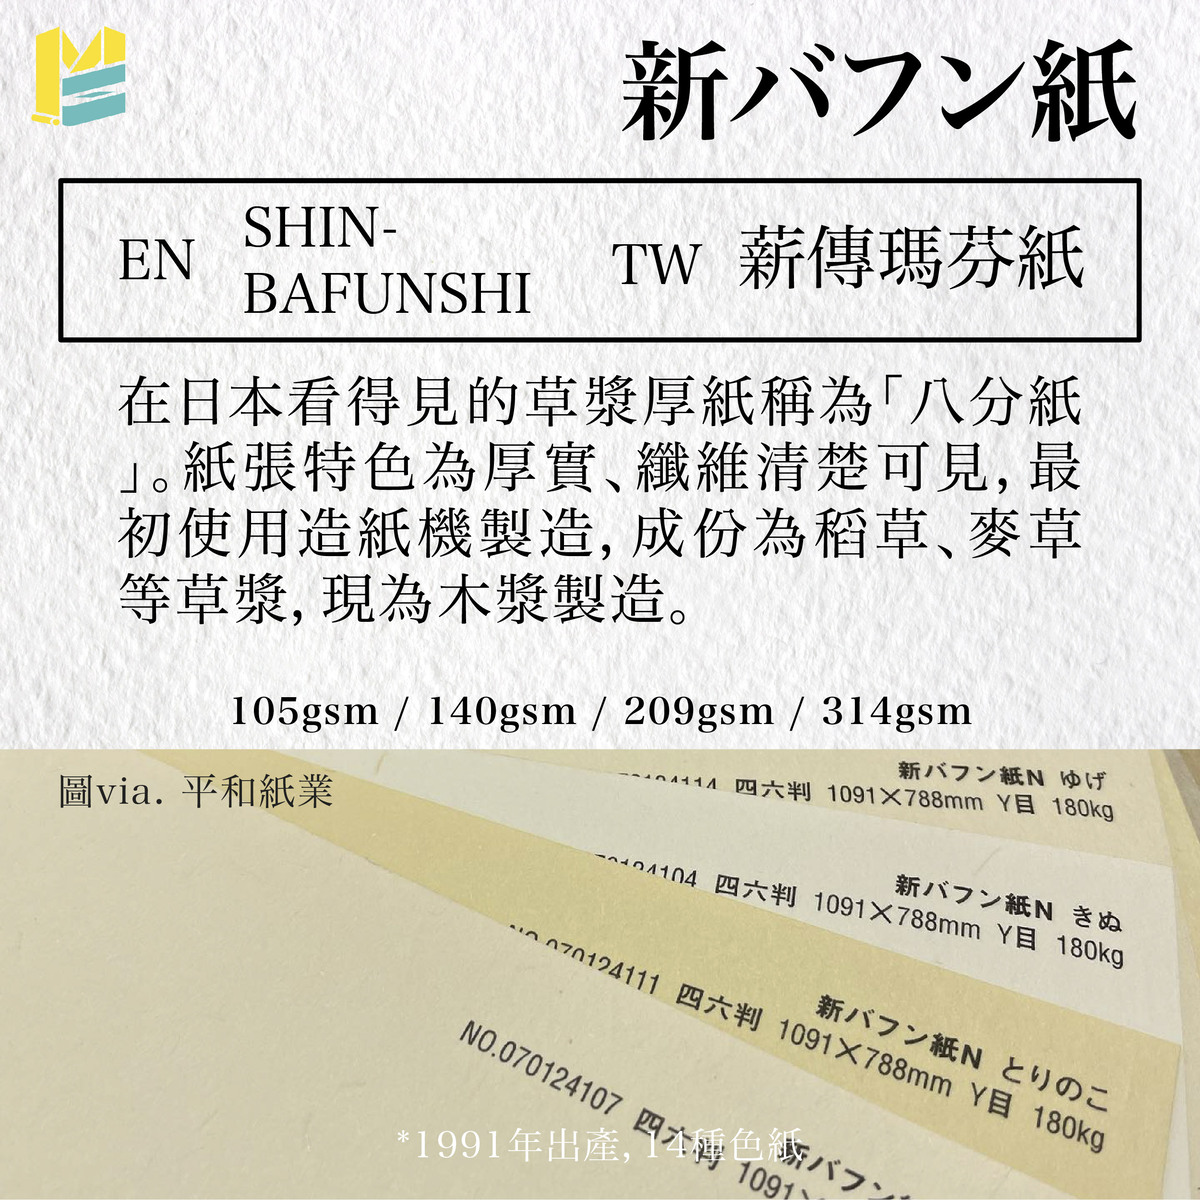 紙張命名對照－SHIN-BAFUNSHI / 薪傳瑪芬紙